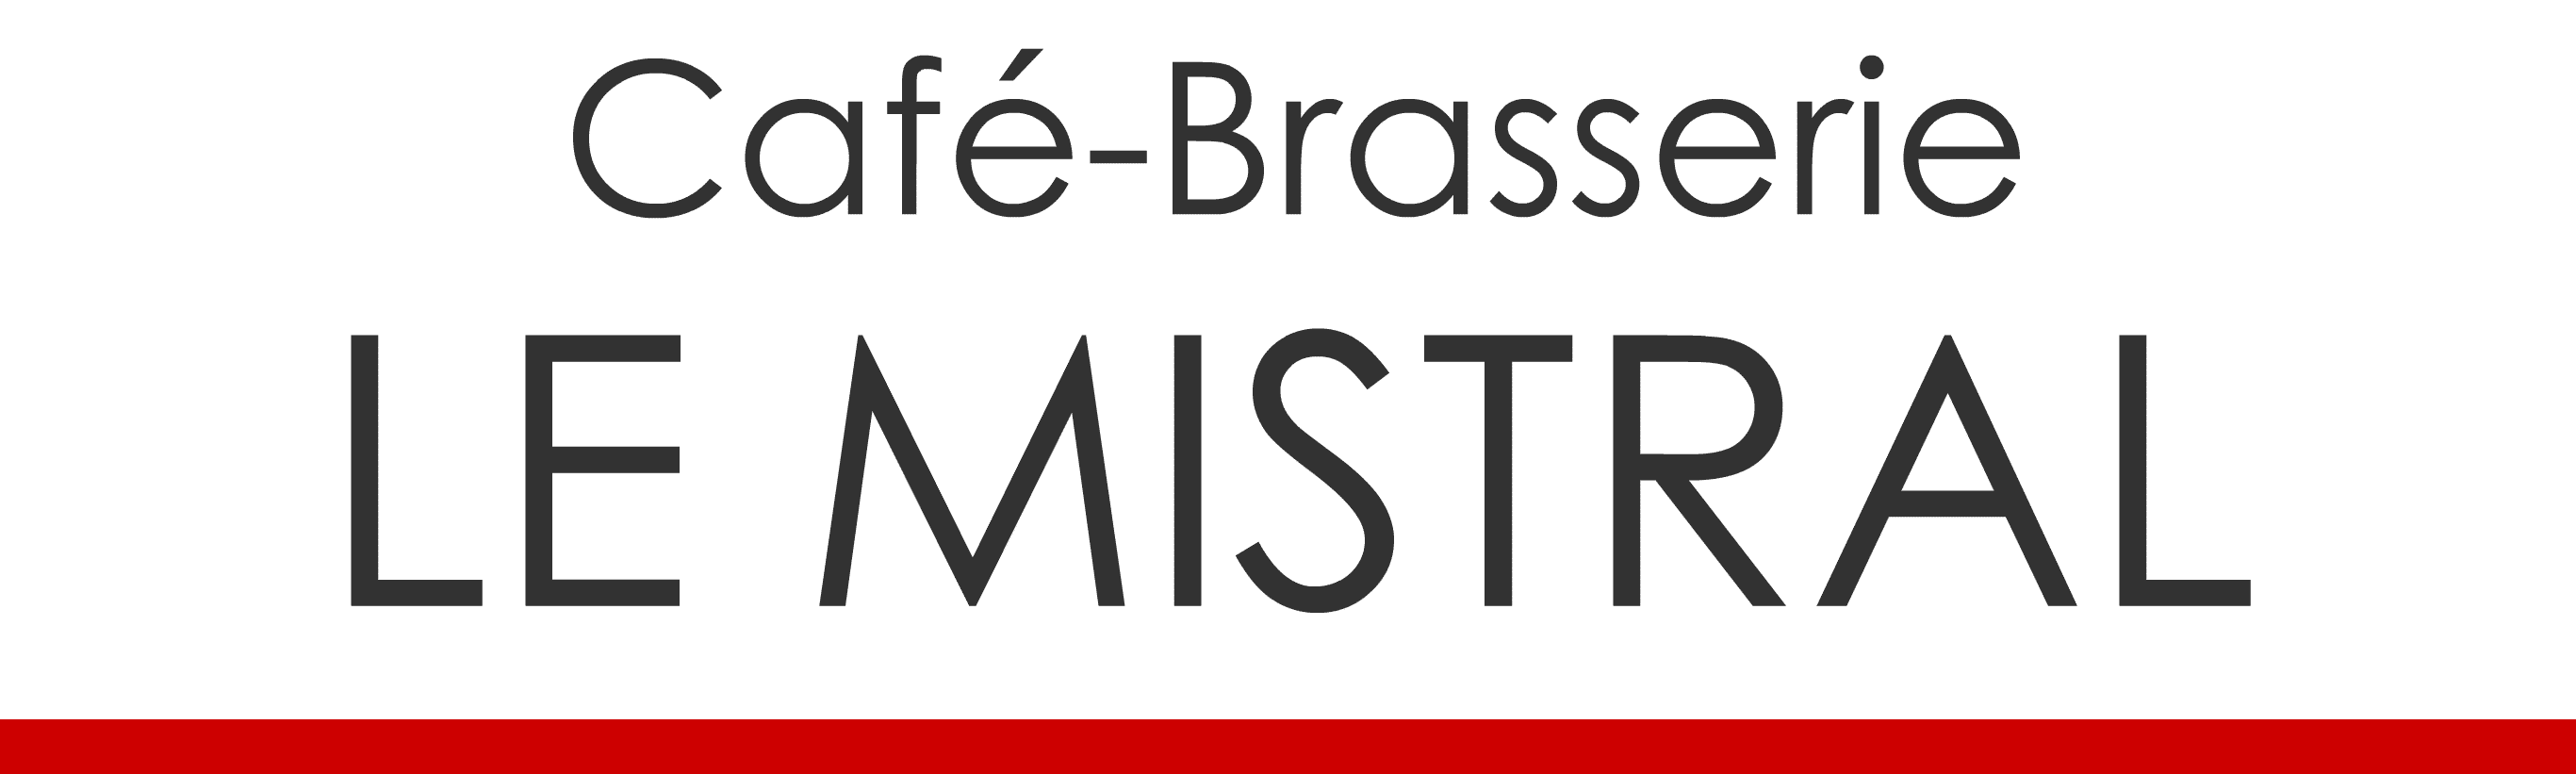 Brasserie Le Mistral